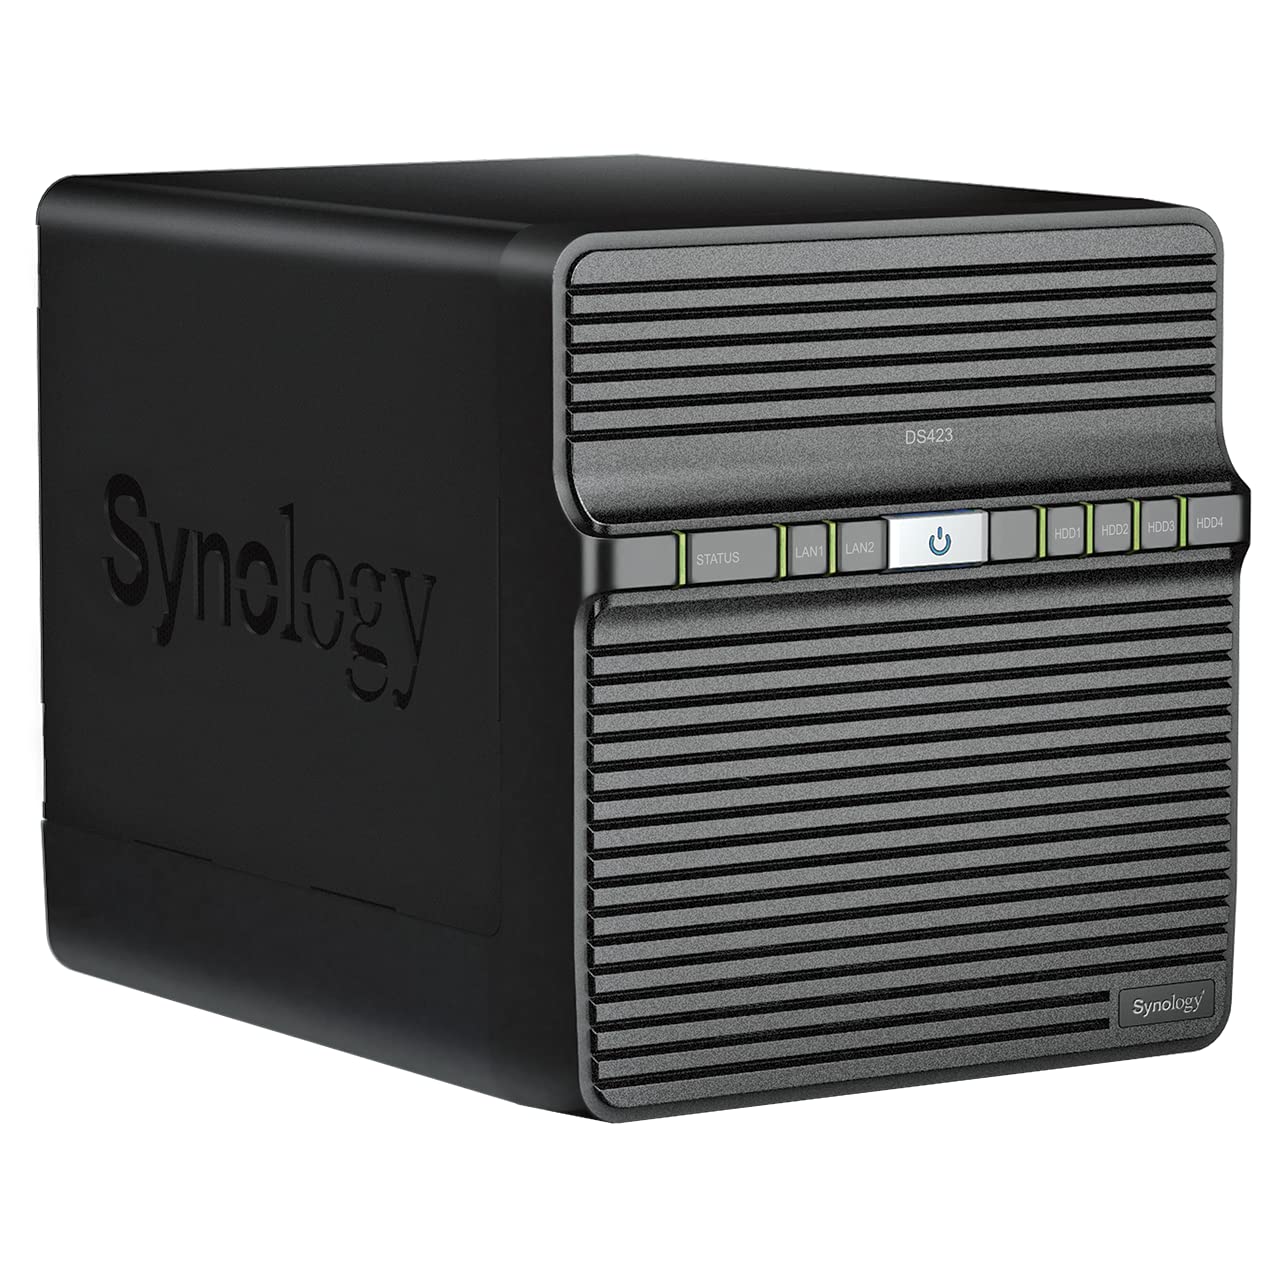 Synology 4-Bay DiskStation DS423 (Diskless)